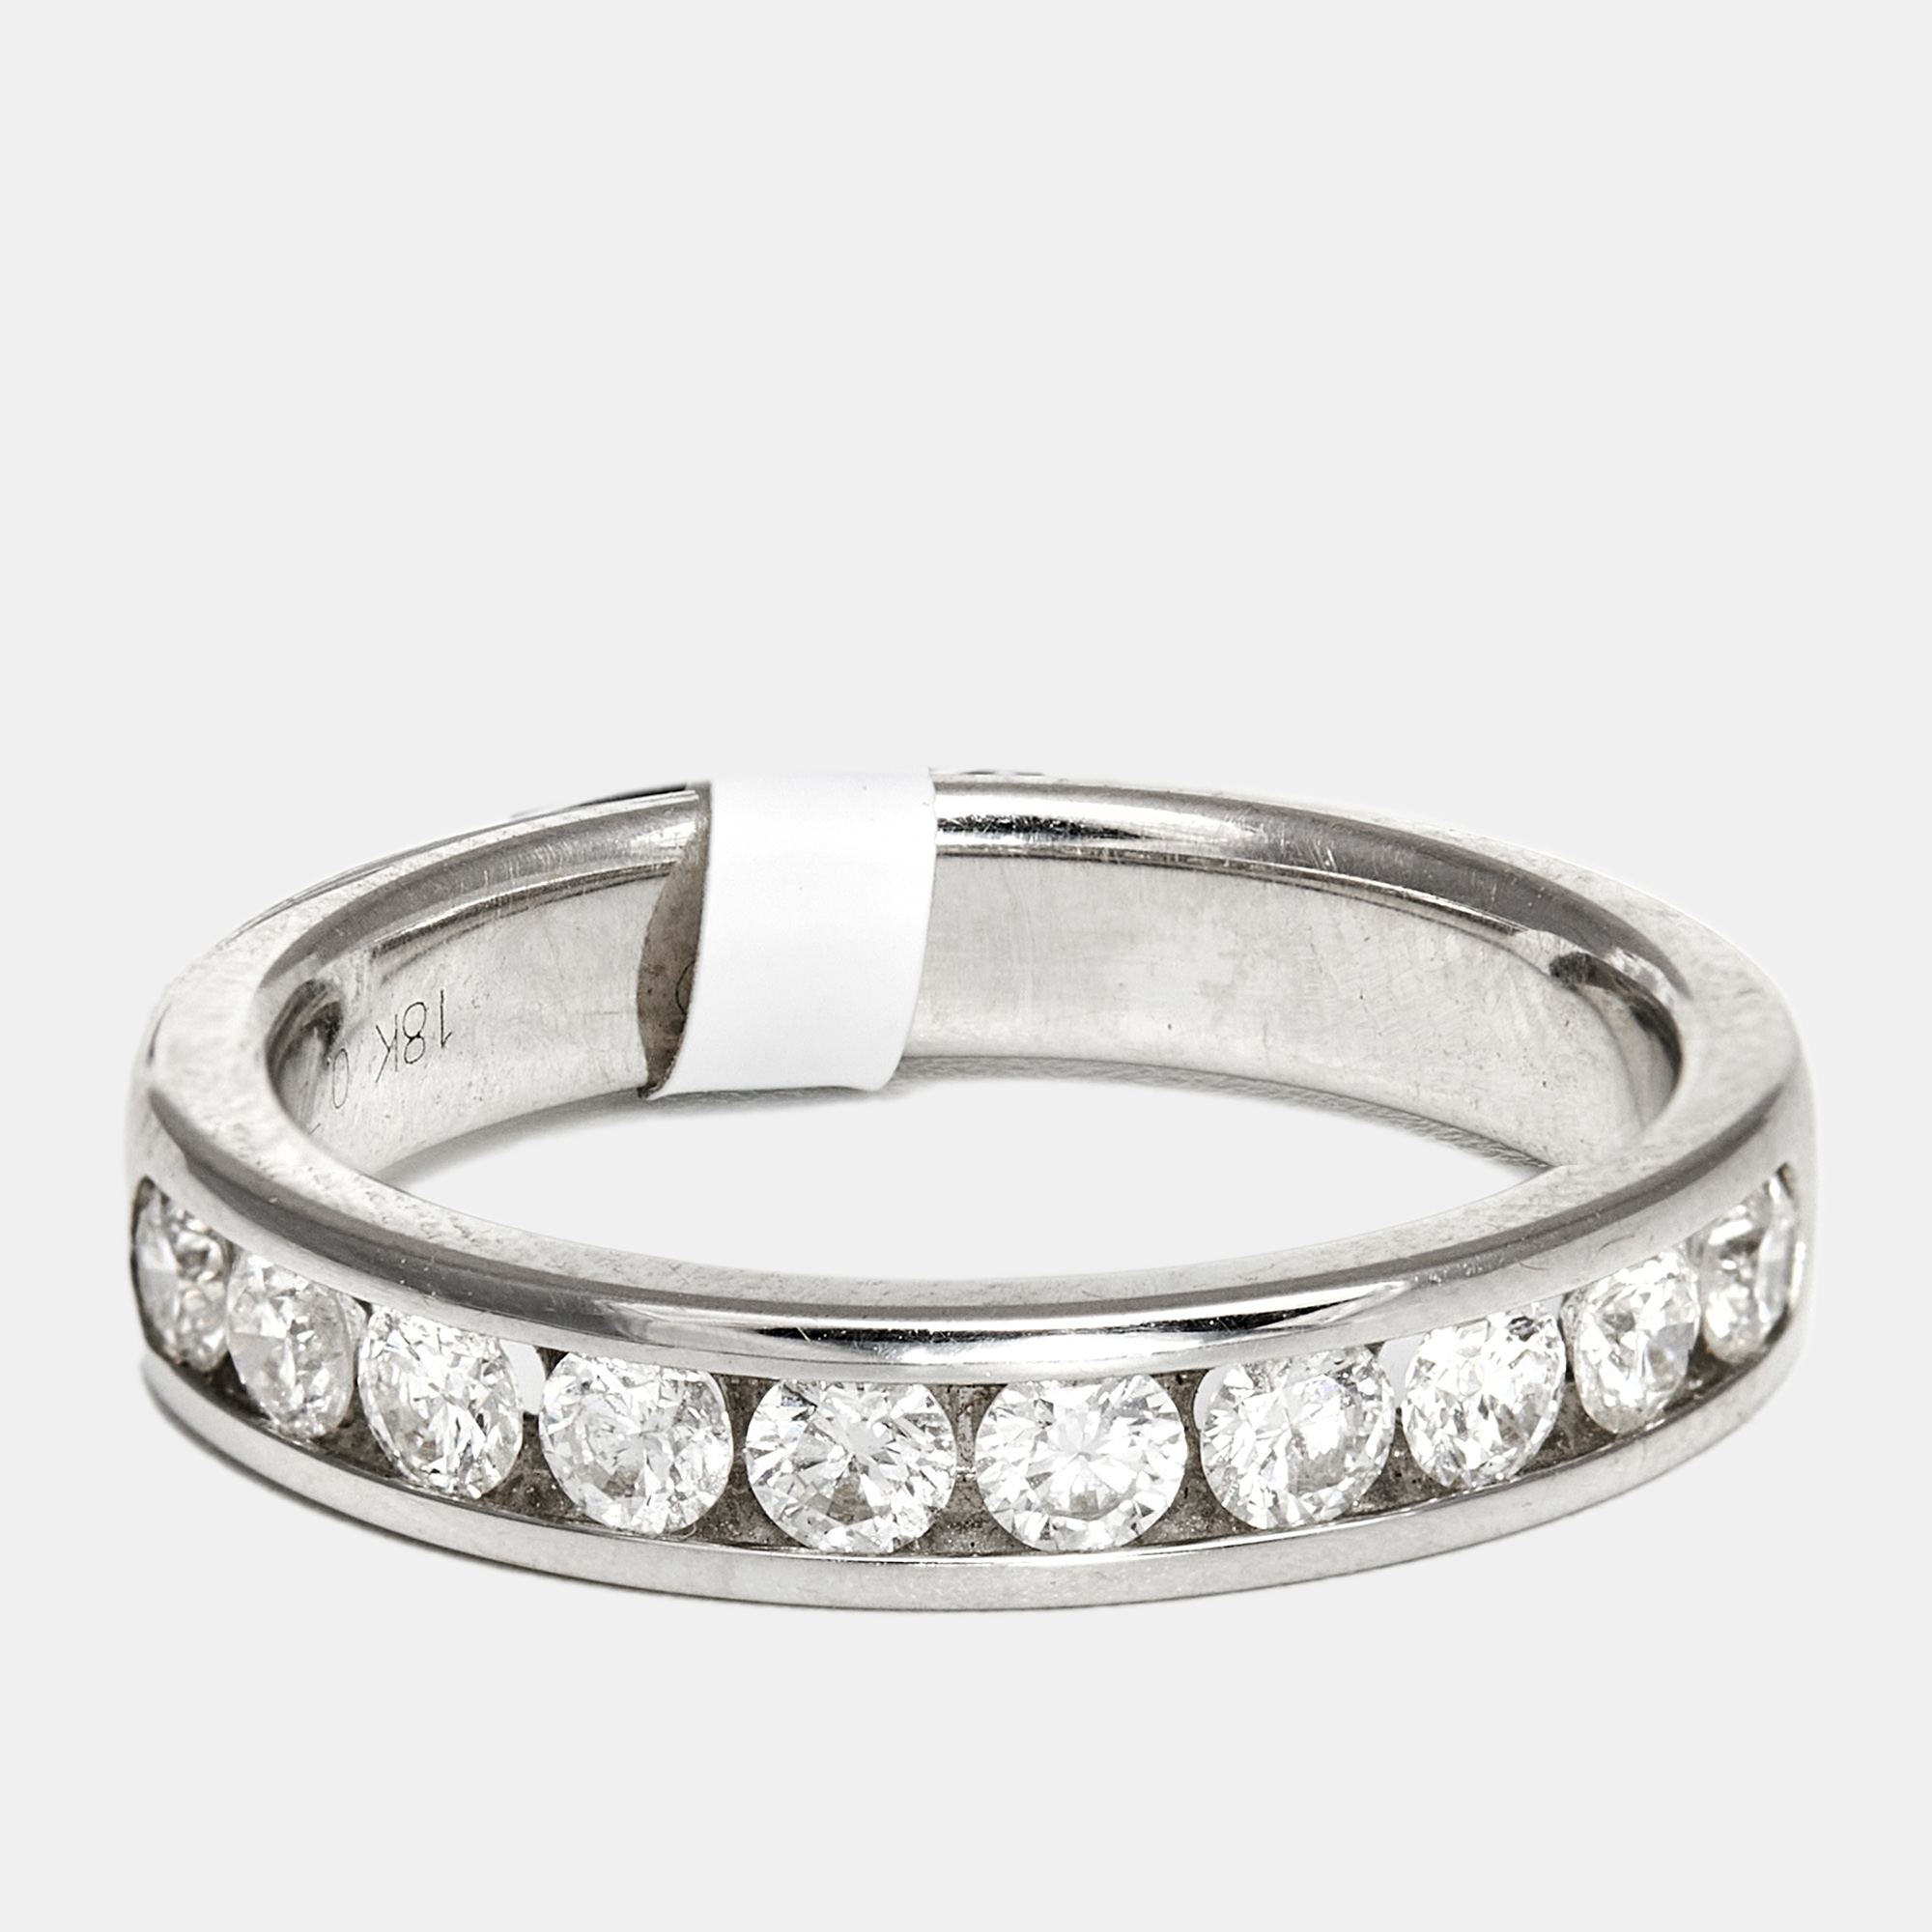 The diamond edit classic round diamond 0.72 ct 18k white gold eternity ring size 54